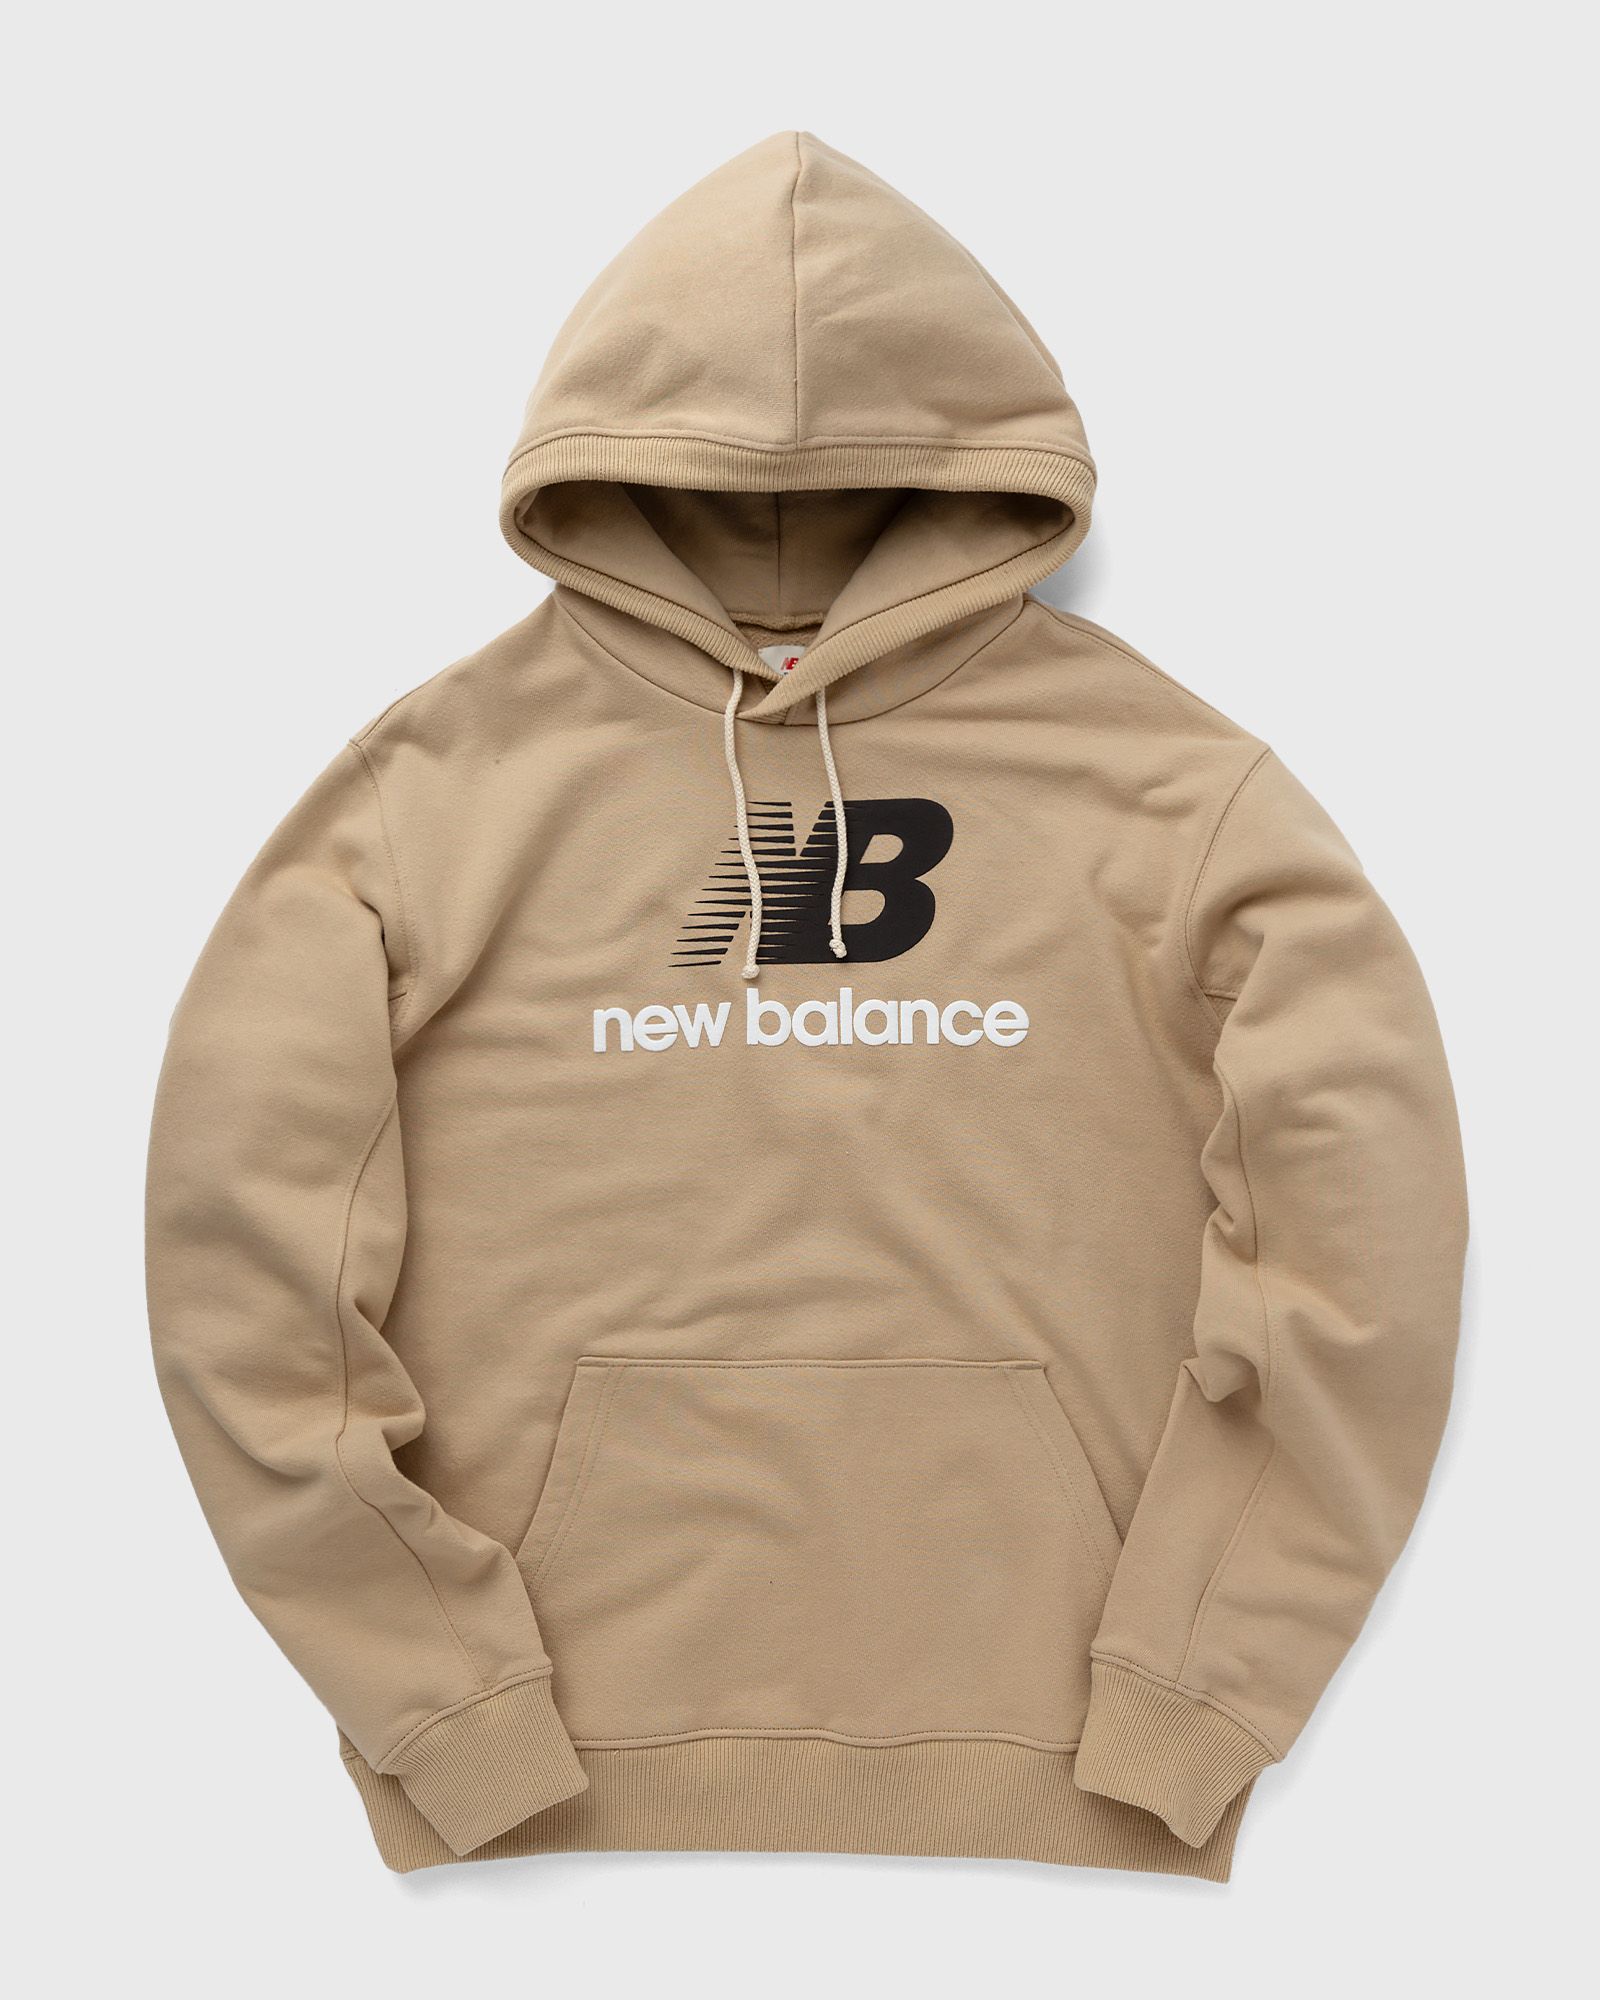 New Balance - made in usa heritage hoodie men hoodies beige in größe:xl